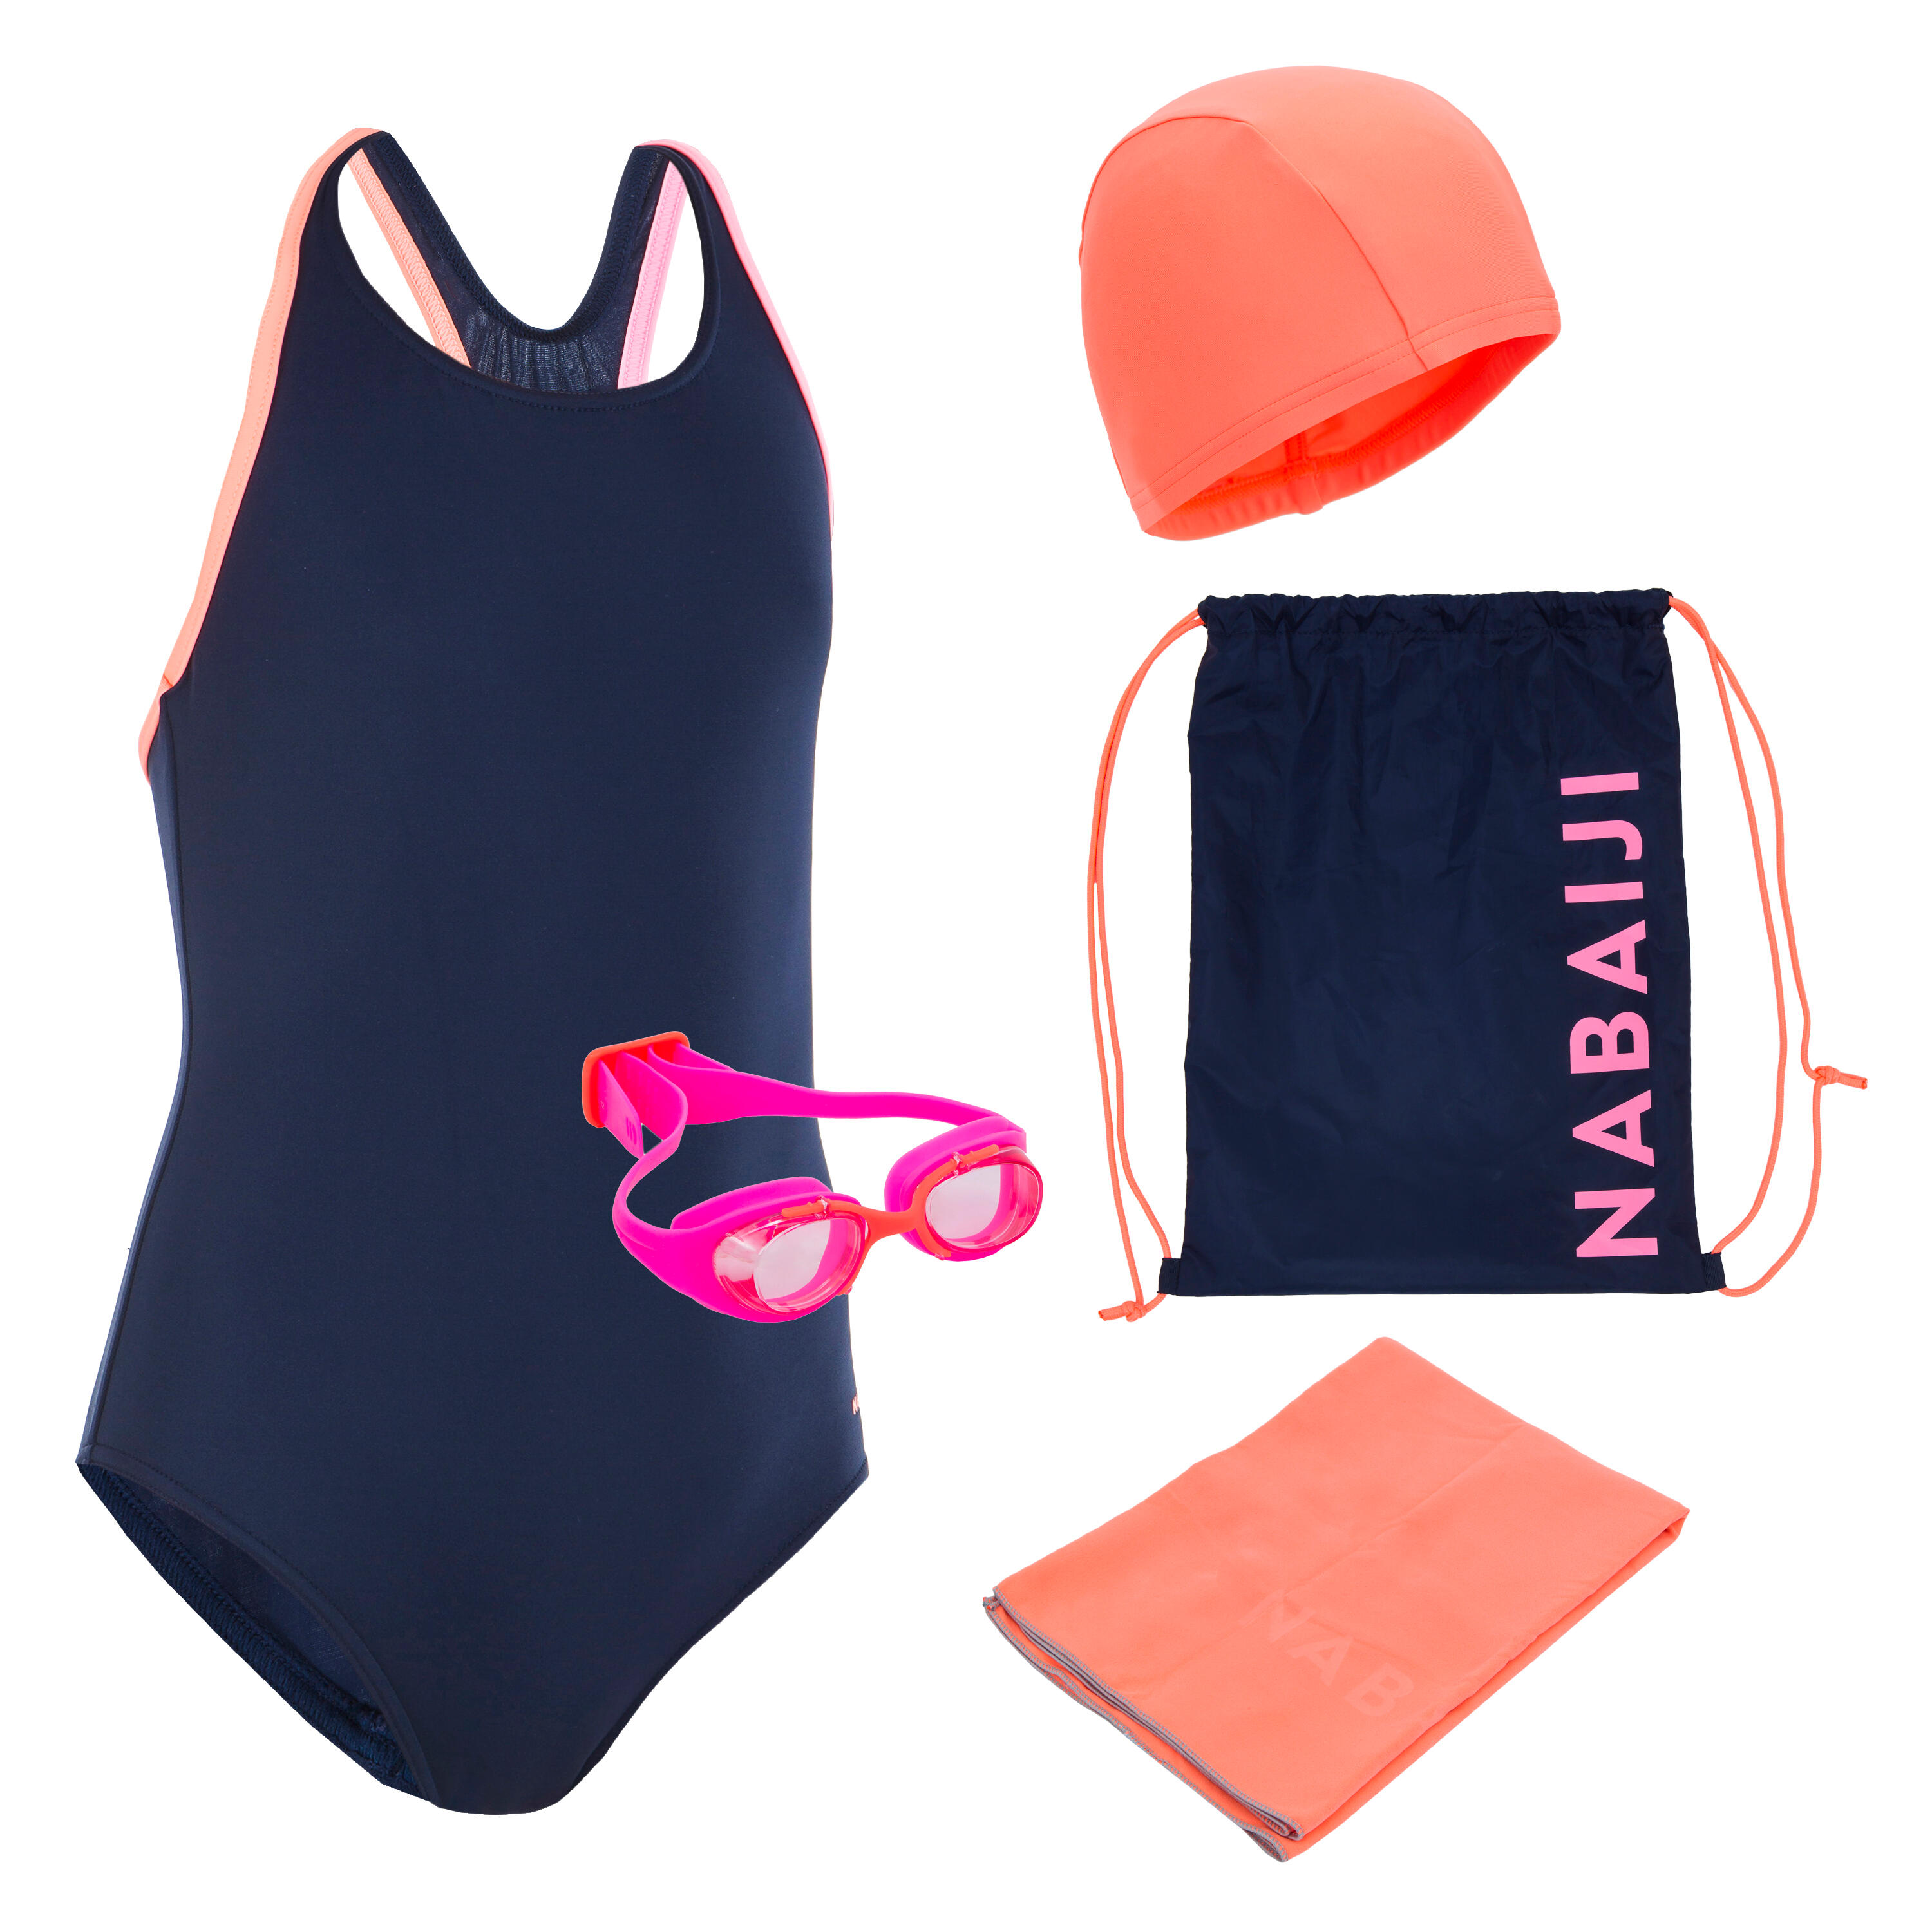 Girls' Swimming Set 100 START: swimming trunks, goggles, cap, towel, bag 1/13